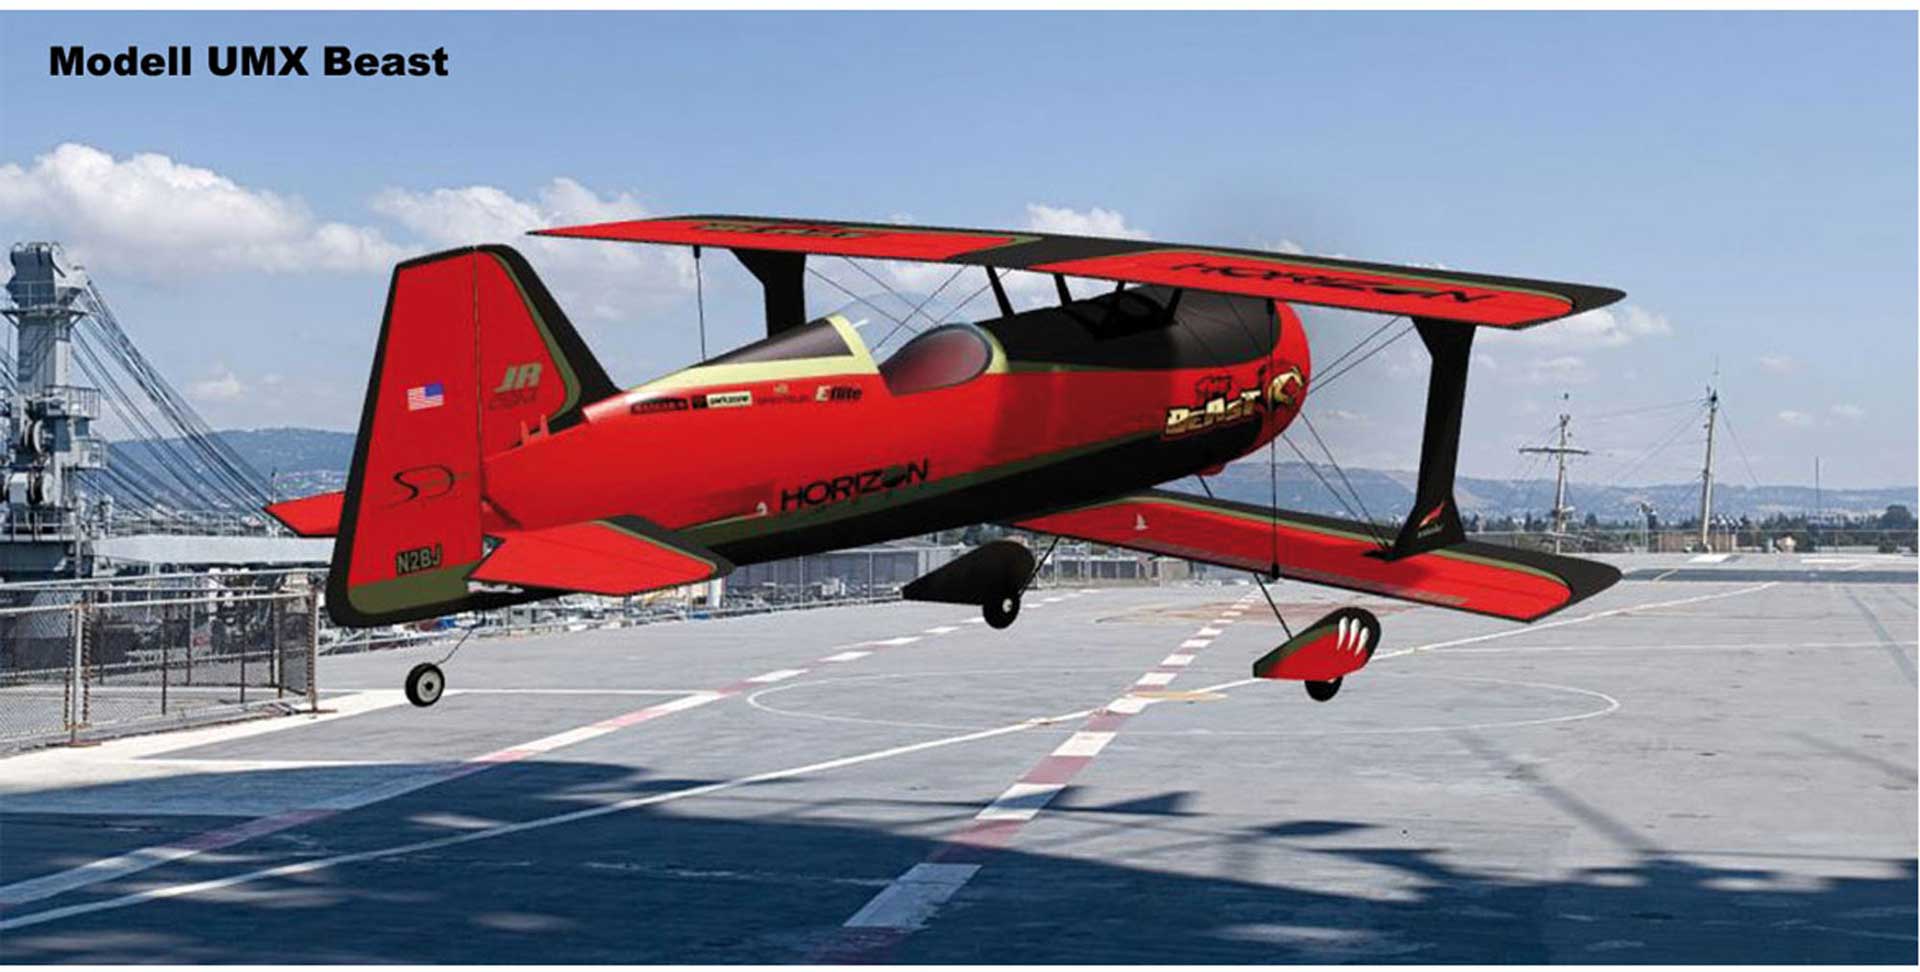 aerofly rc 7 professional edition